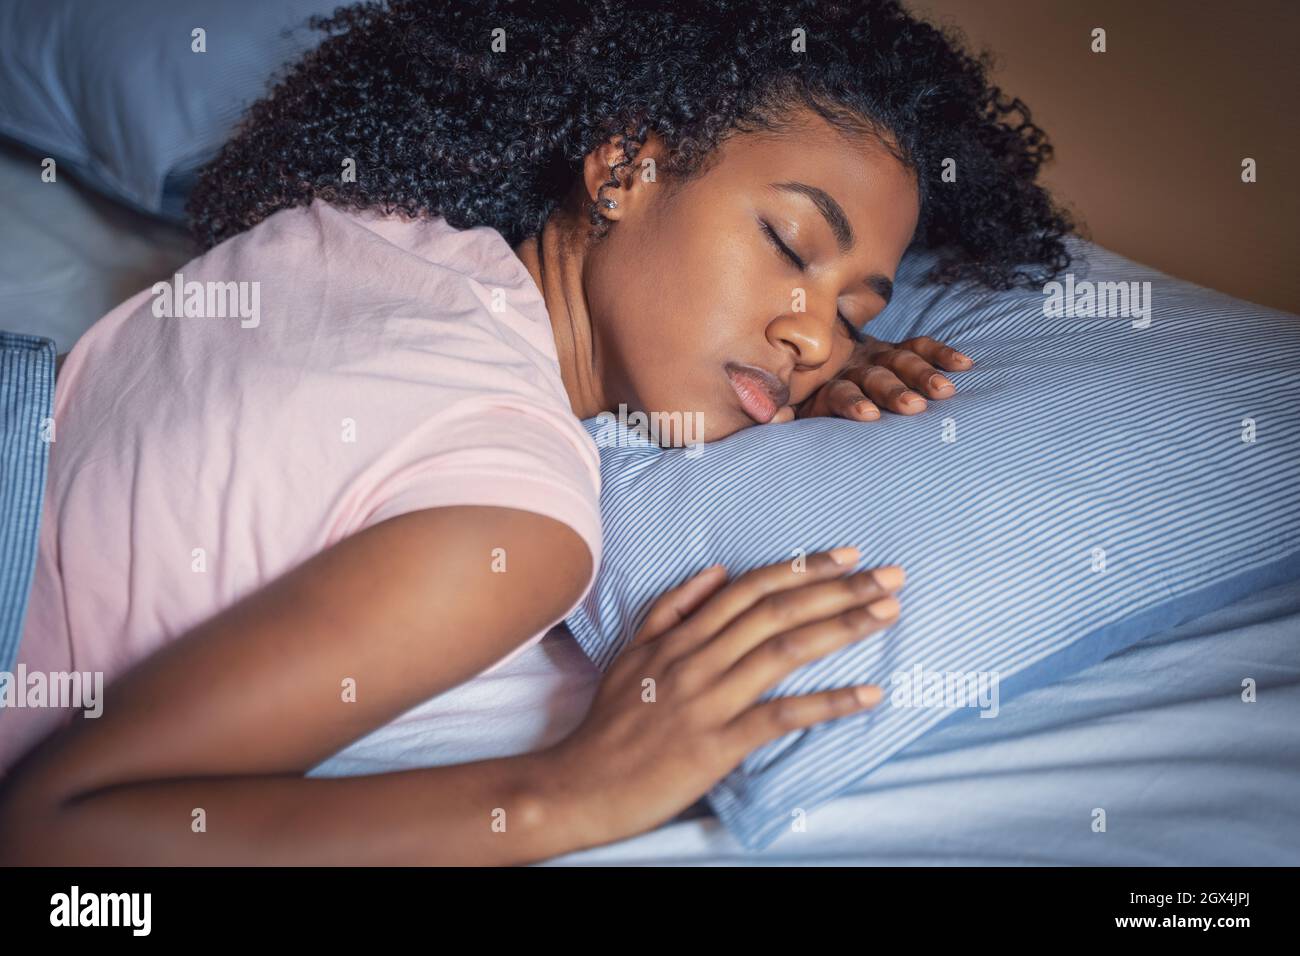 Very Young Black Teen Girls Sleeping